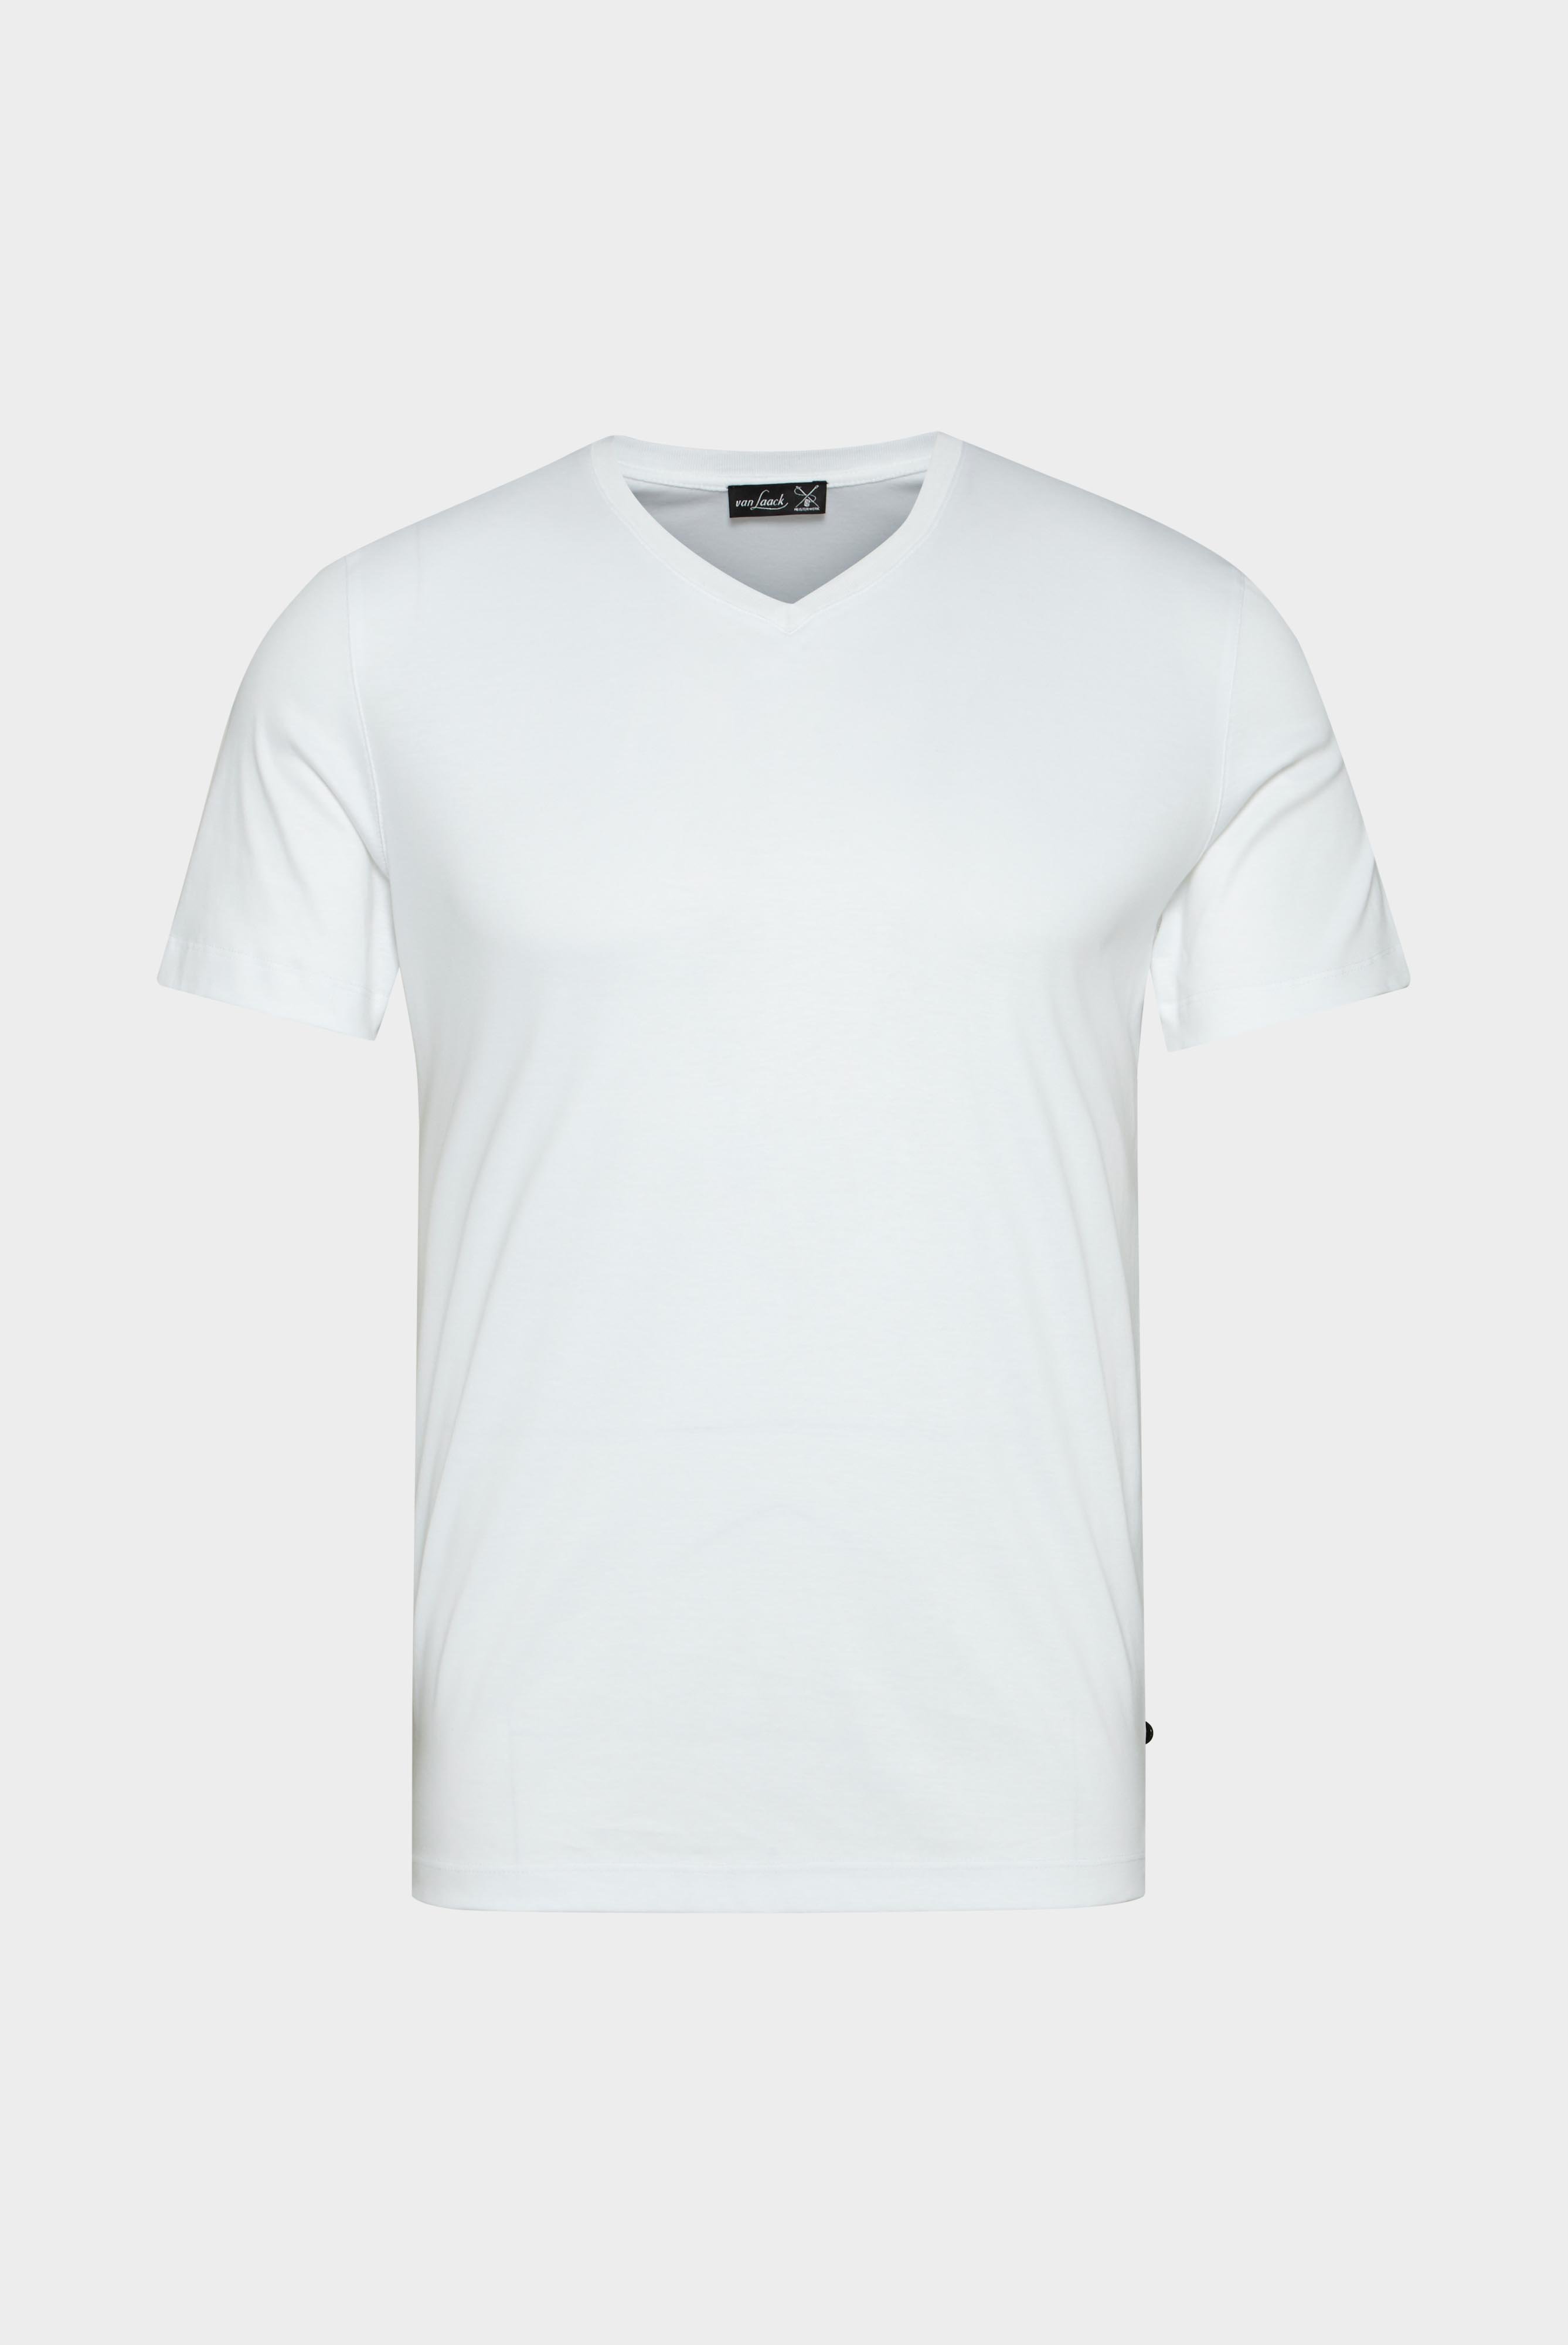 T-Shirts+Swiss Cotton Jersey V-Neck T-Shirt+20.1715.UX.180031.000.M